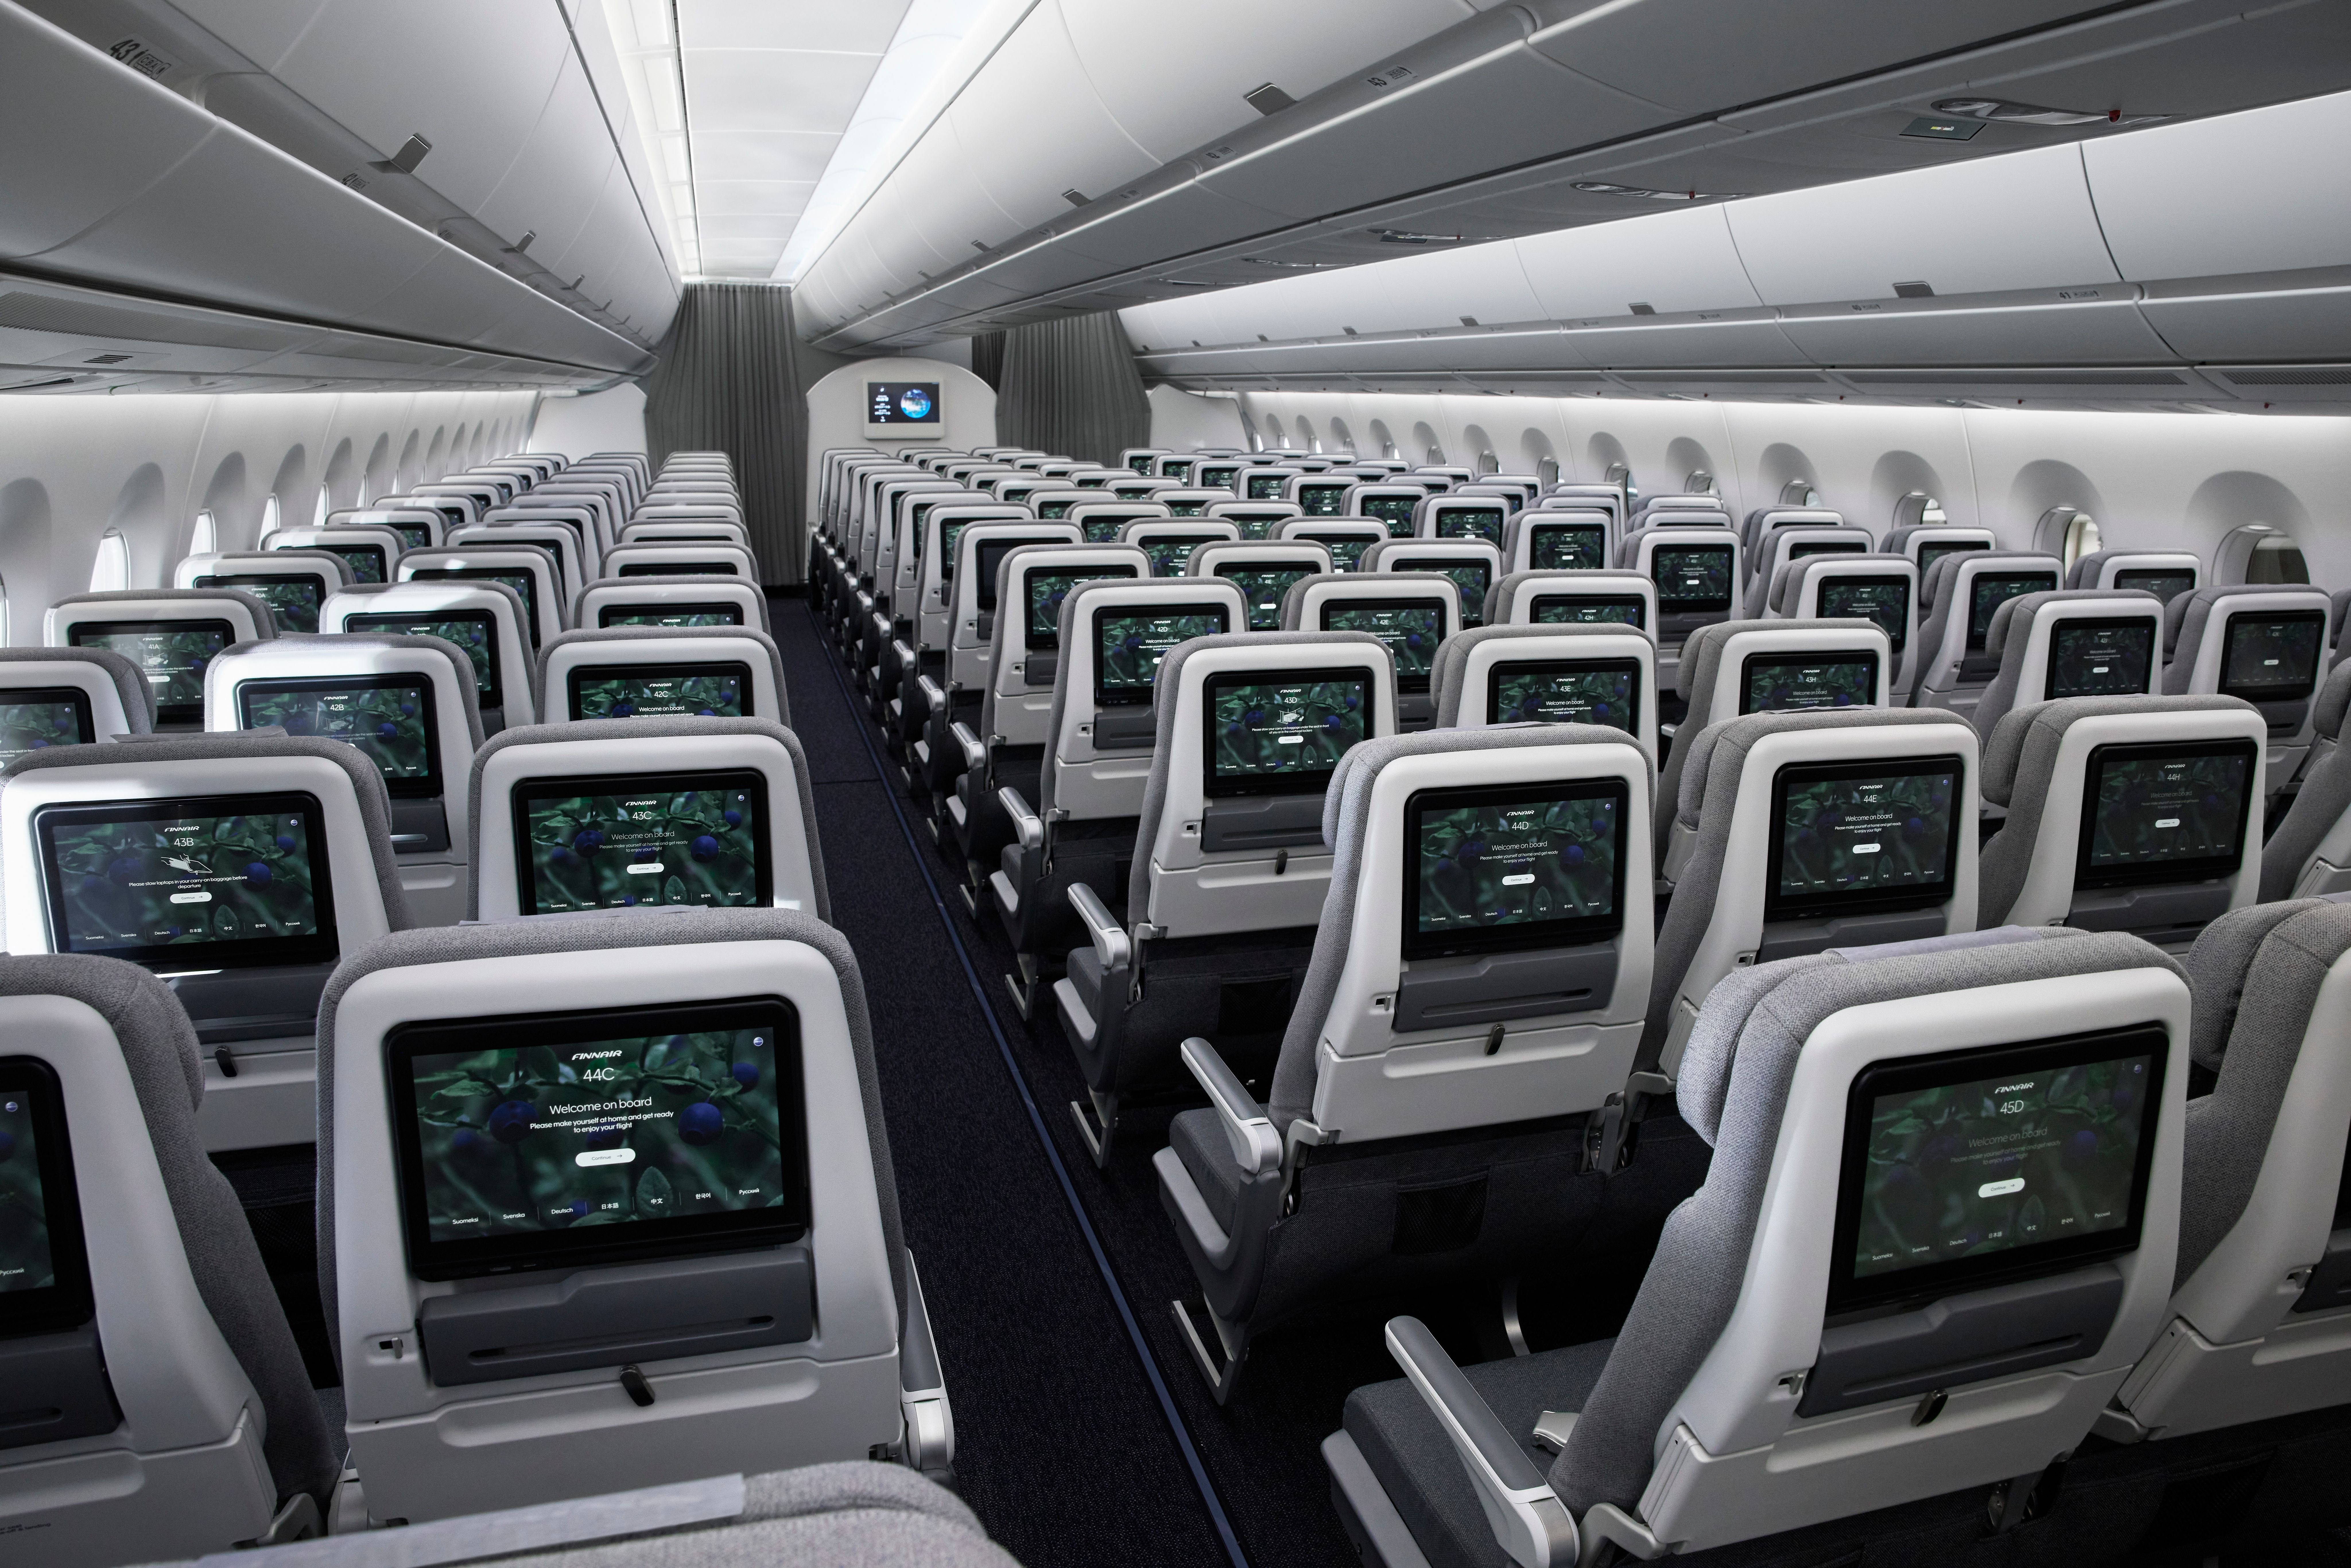 Finnair A350 Economy Class interior picture.